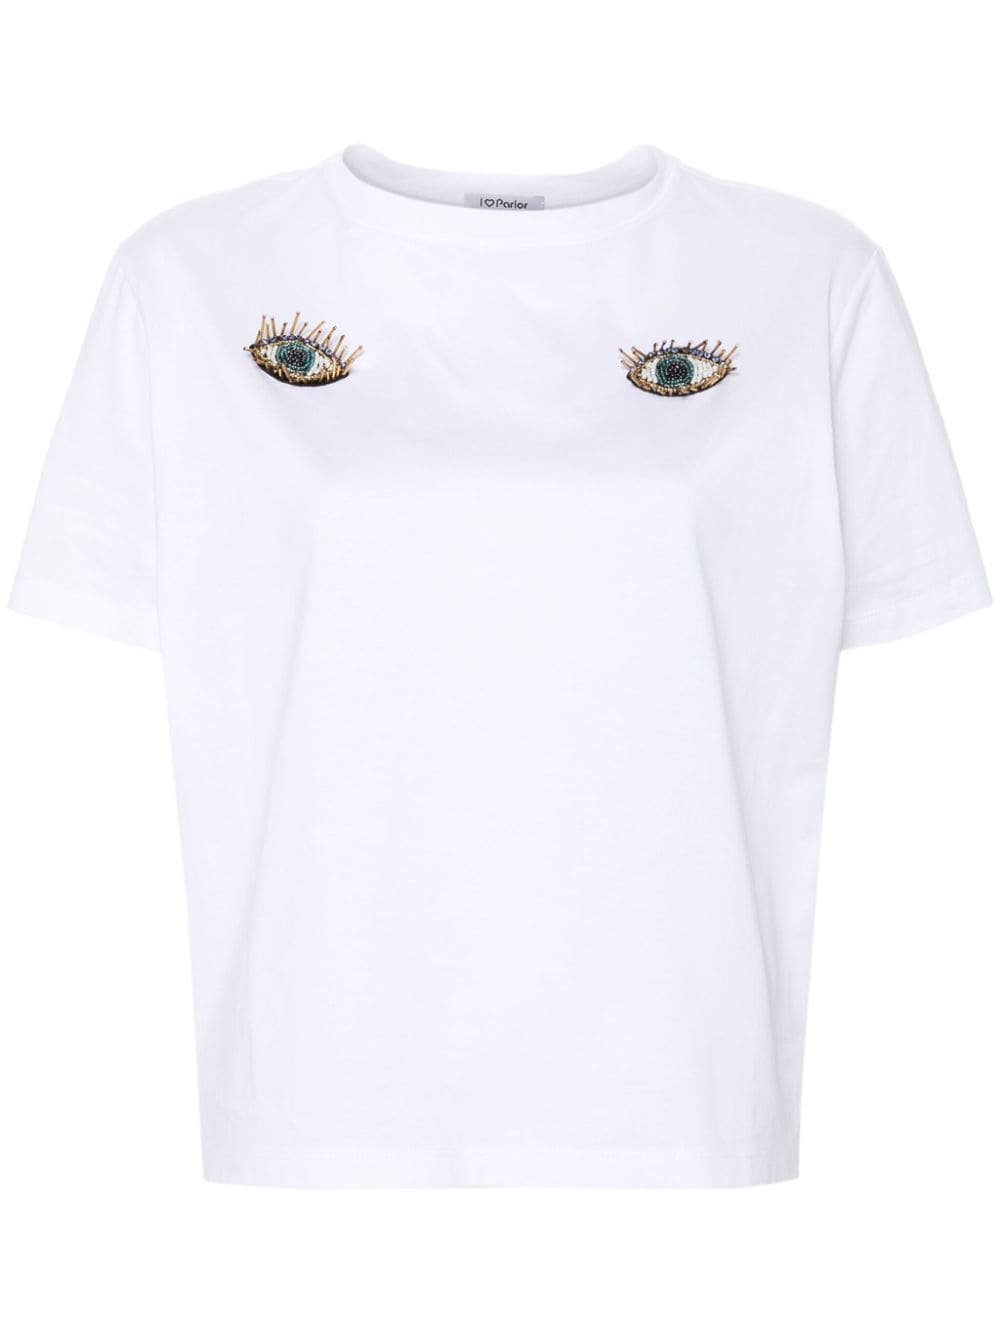 Parlor eye-patch cotton T-shirt - White von Parlor